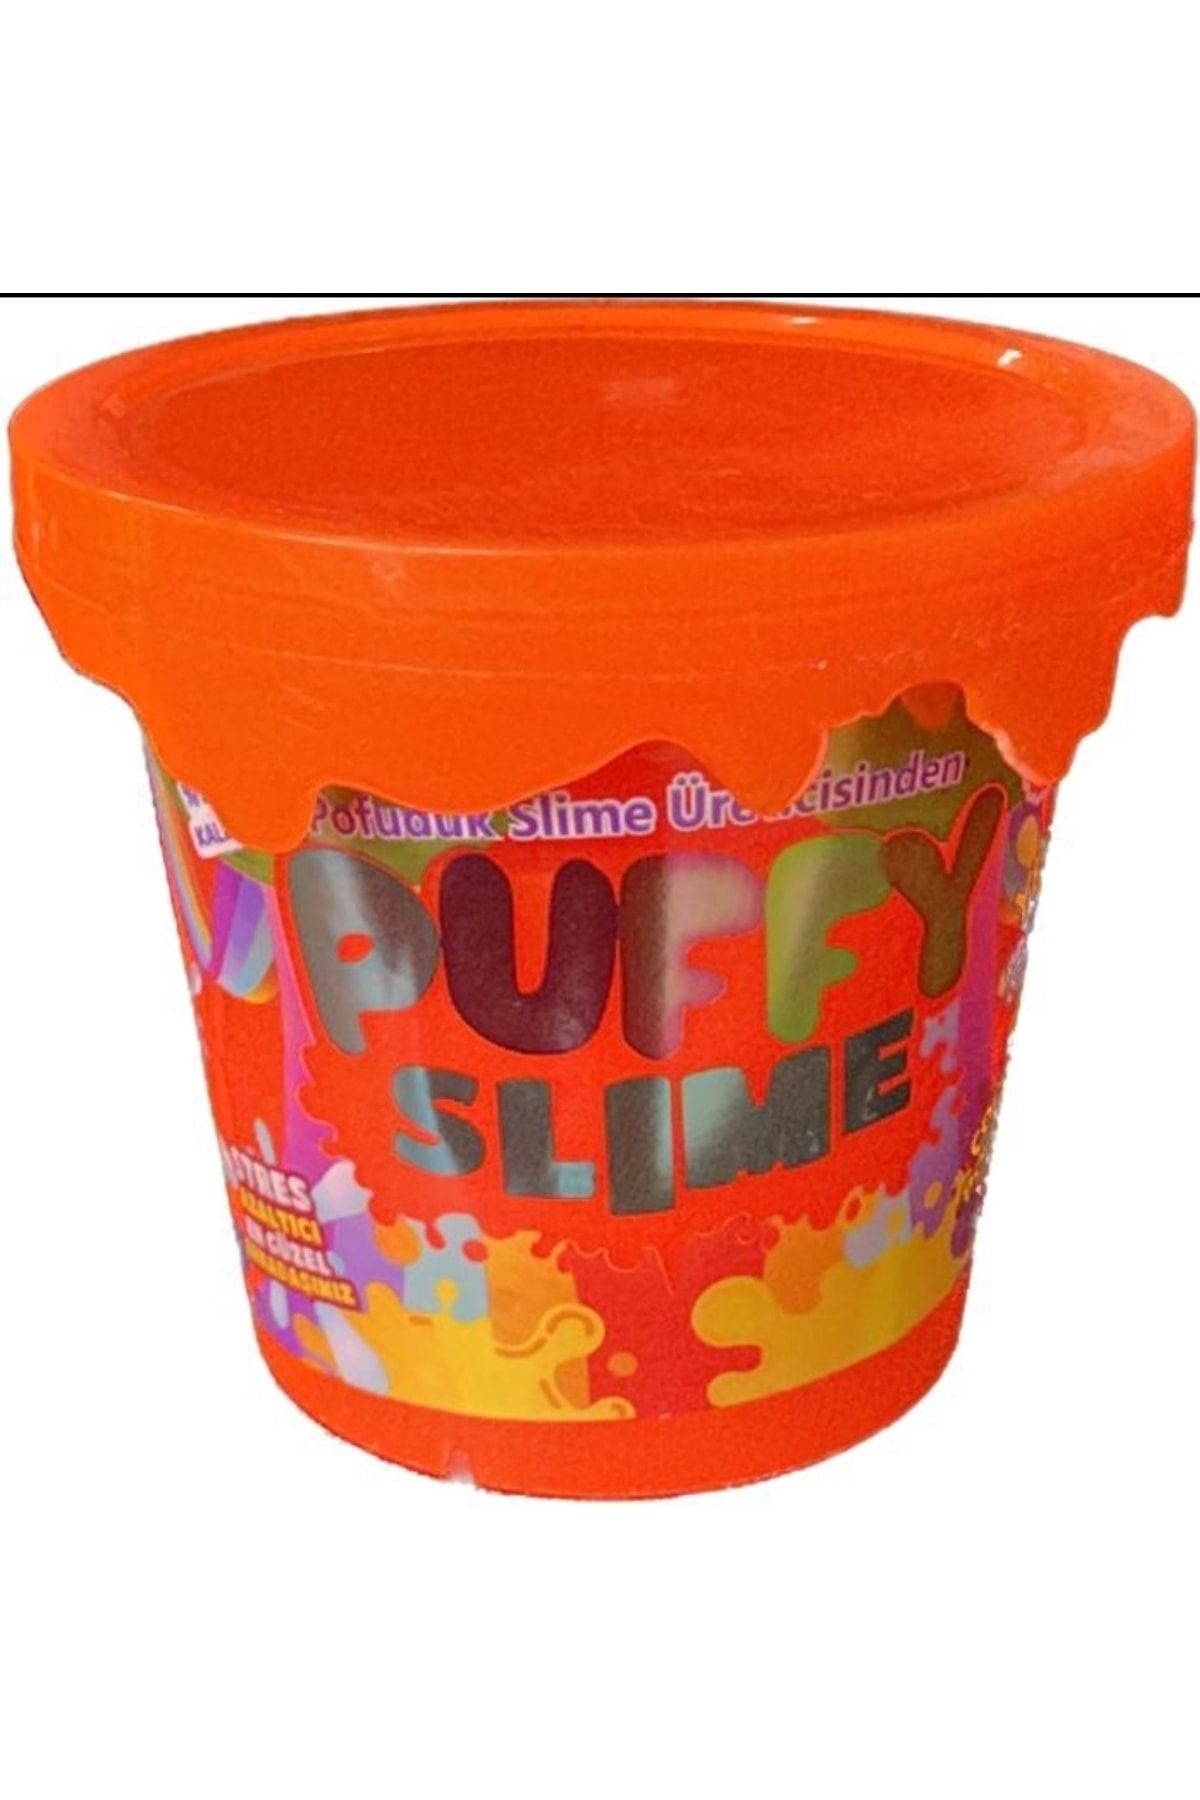 ümit toys Puffy Turuncu Slime Yeni Trend Slime - 1 Adet Hazır Slime 4 Farklı Renkler 120 gr Slaym Pop Tube